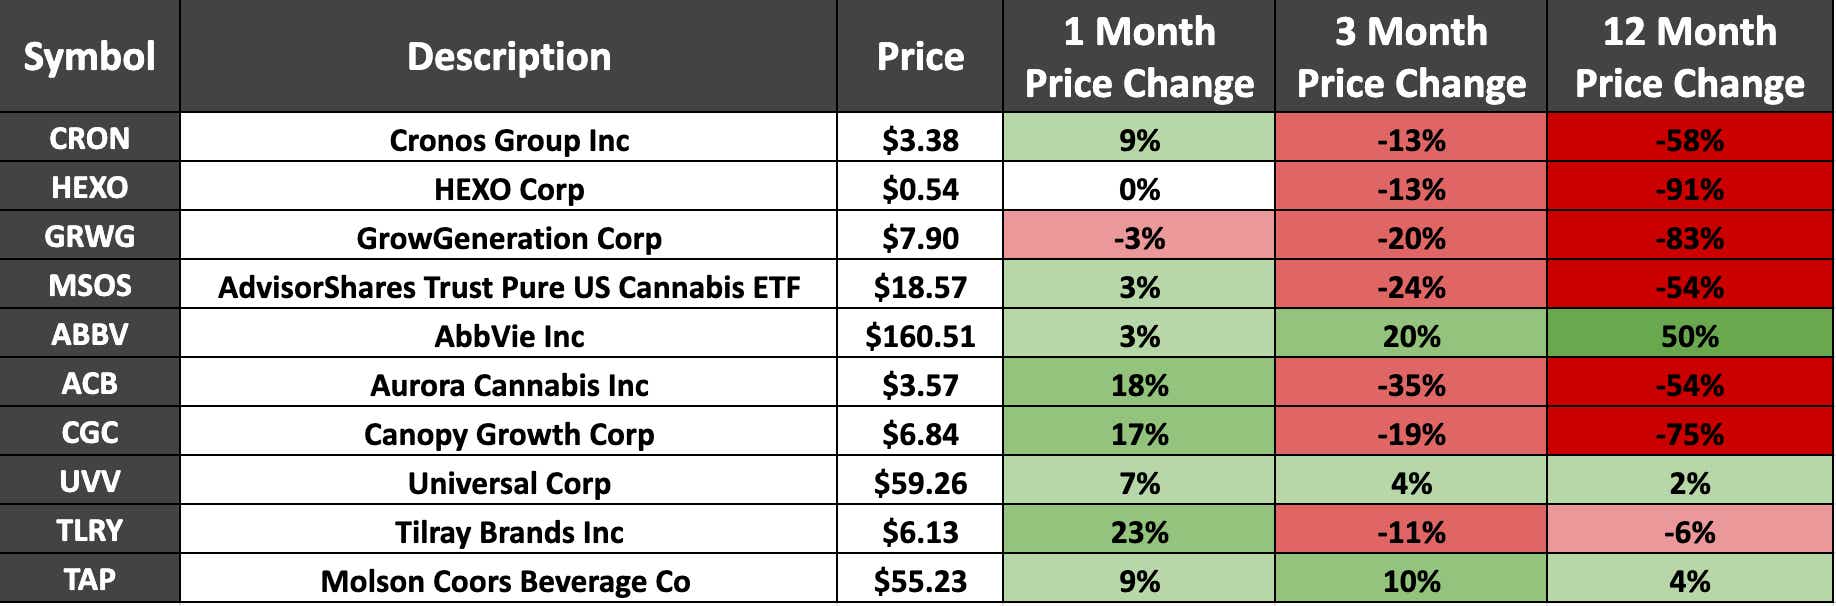 Top 10 Cannabis Stocks Price Change